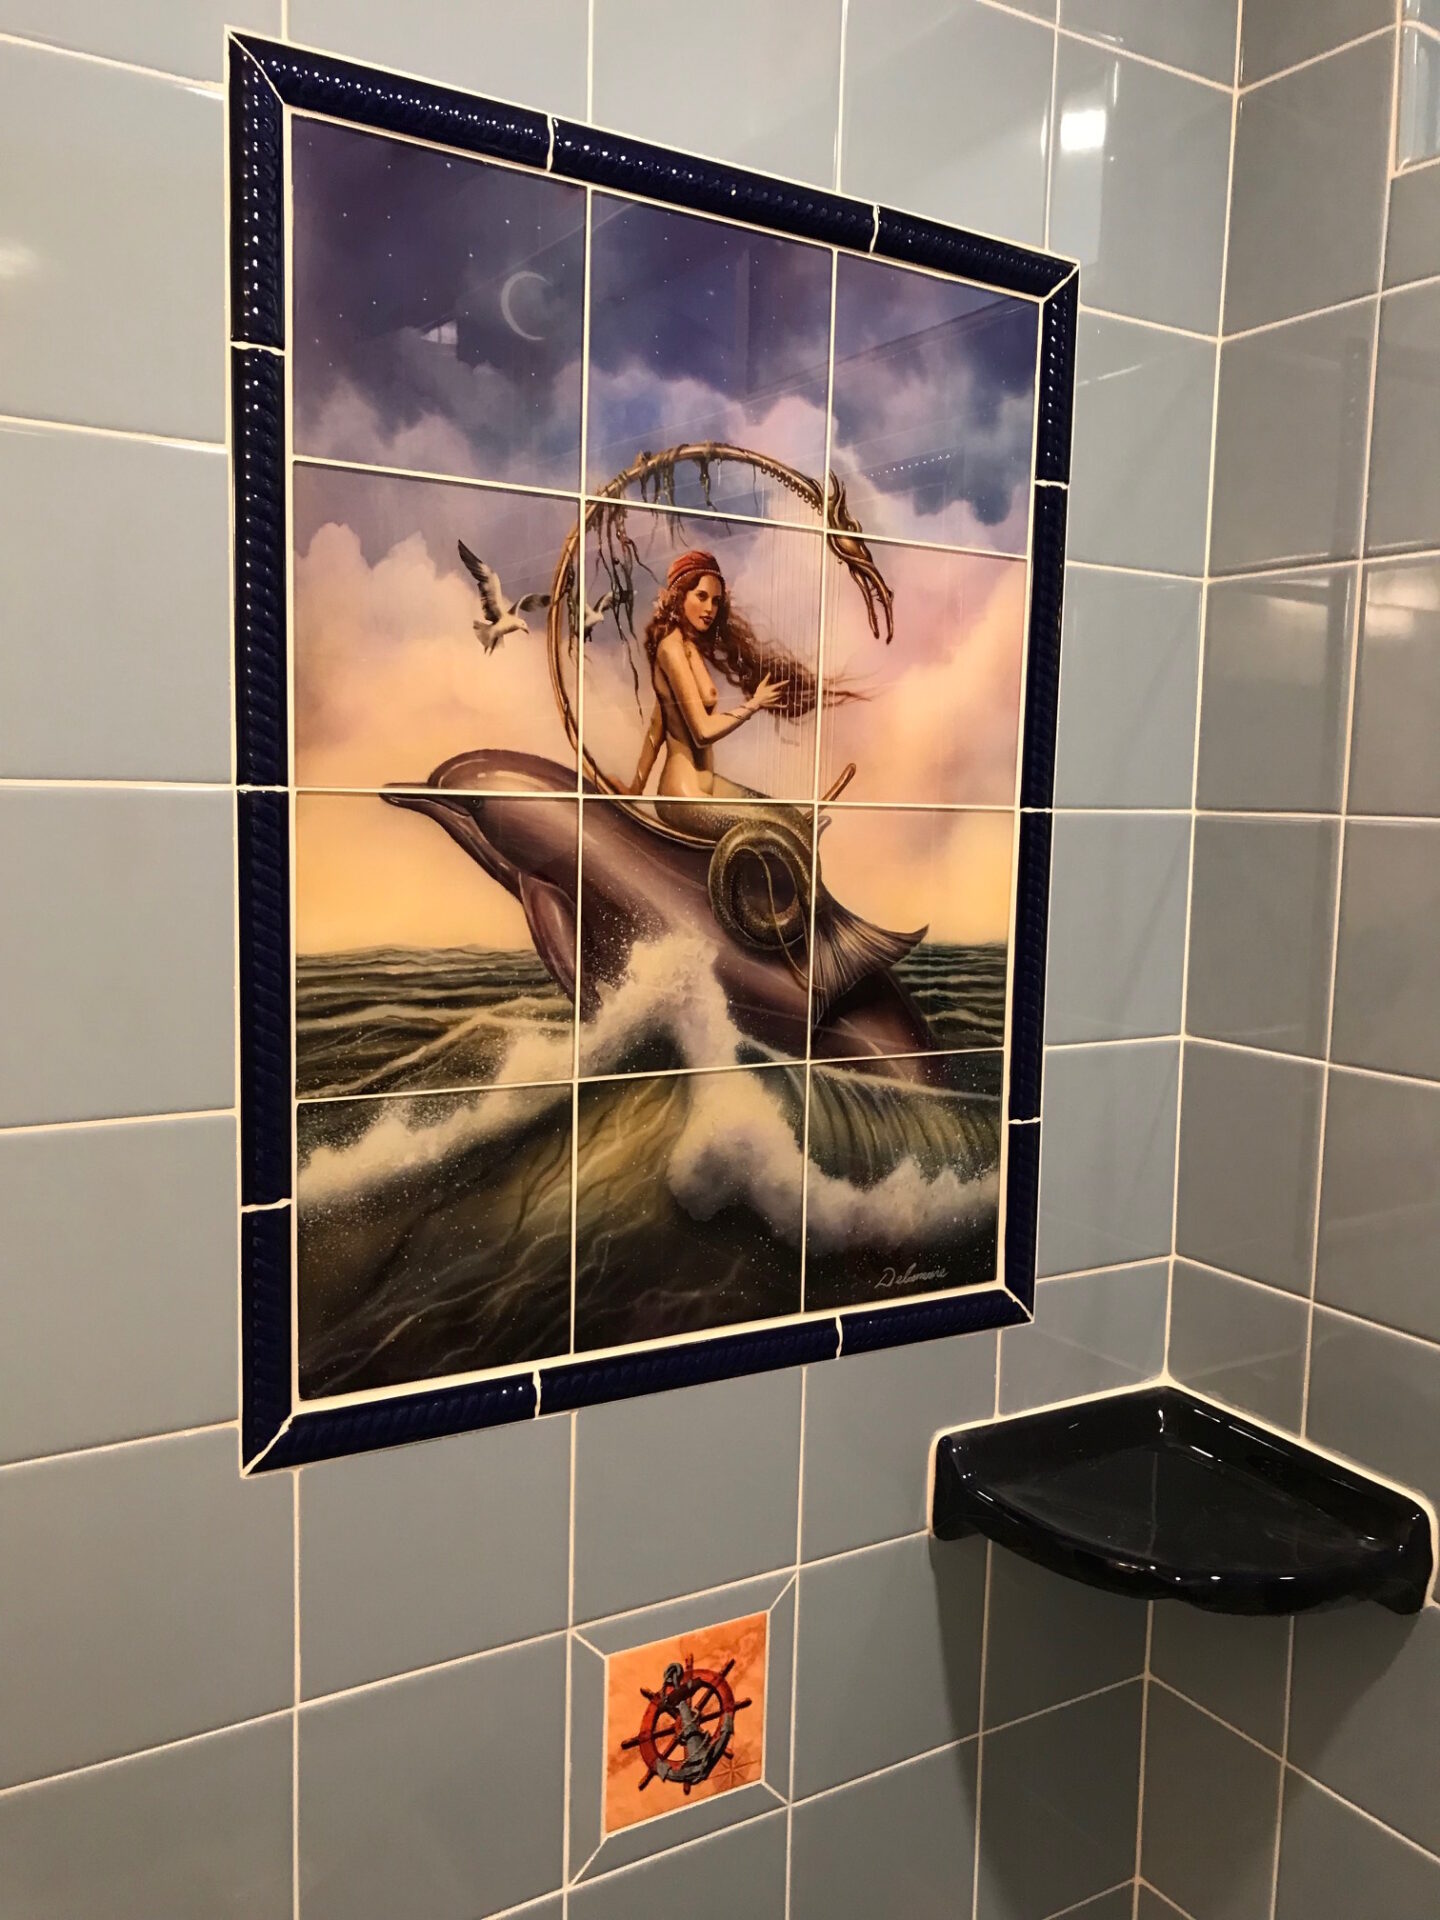 Mermaid Sitting On The Dolphin Tile - Tile Mural Creative Arts